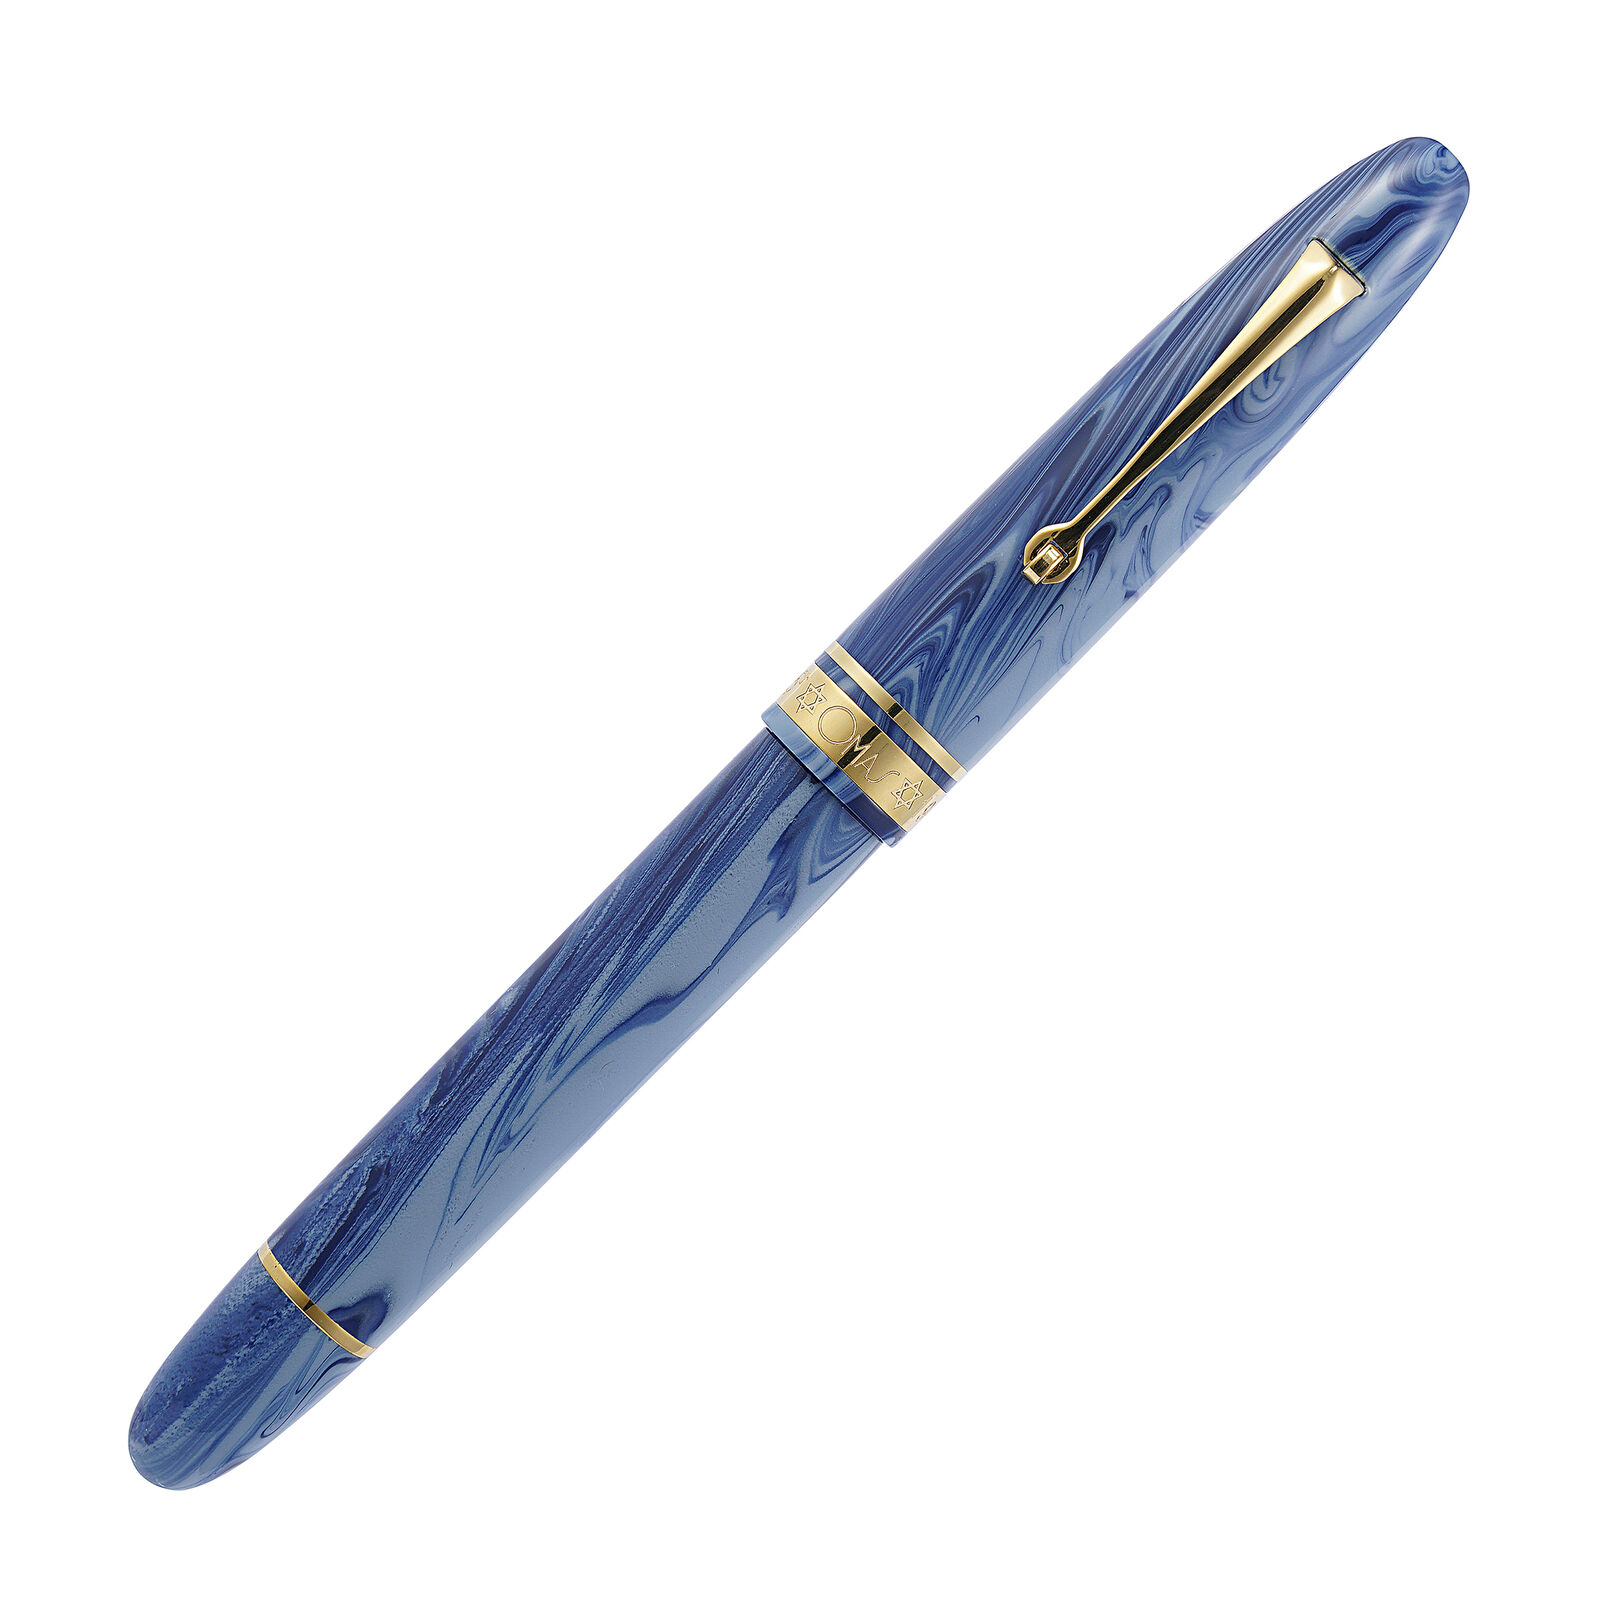 Omas Ogiva Israel Limited Edition Fountain Pen with Gold Trim - 14kt Medium Nib